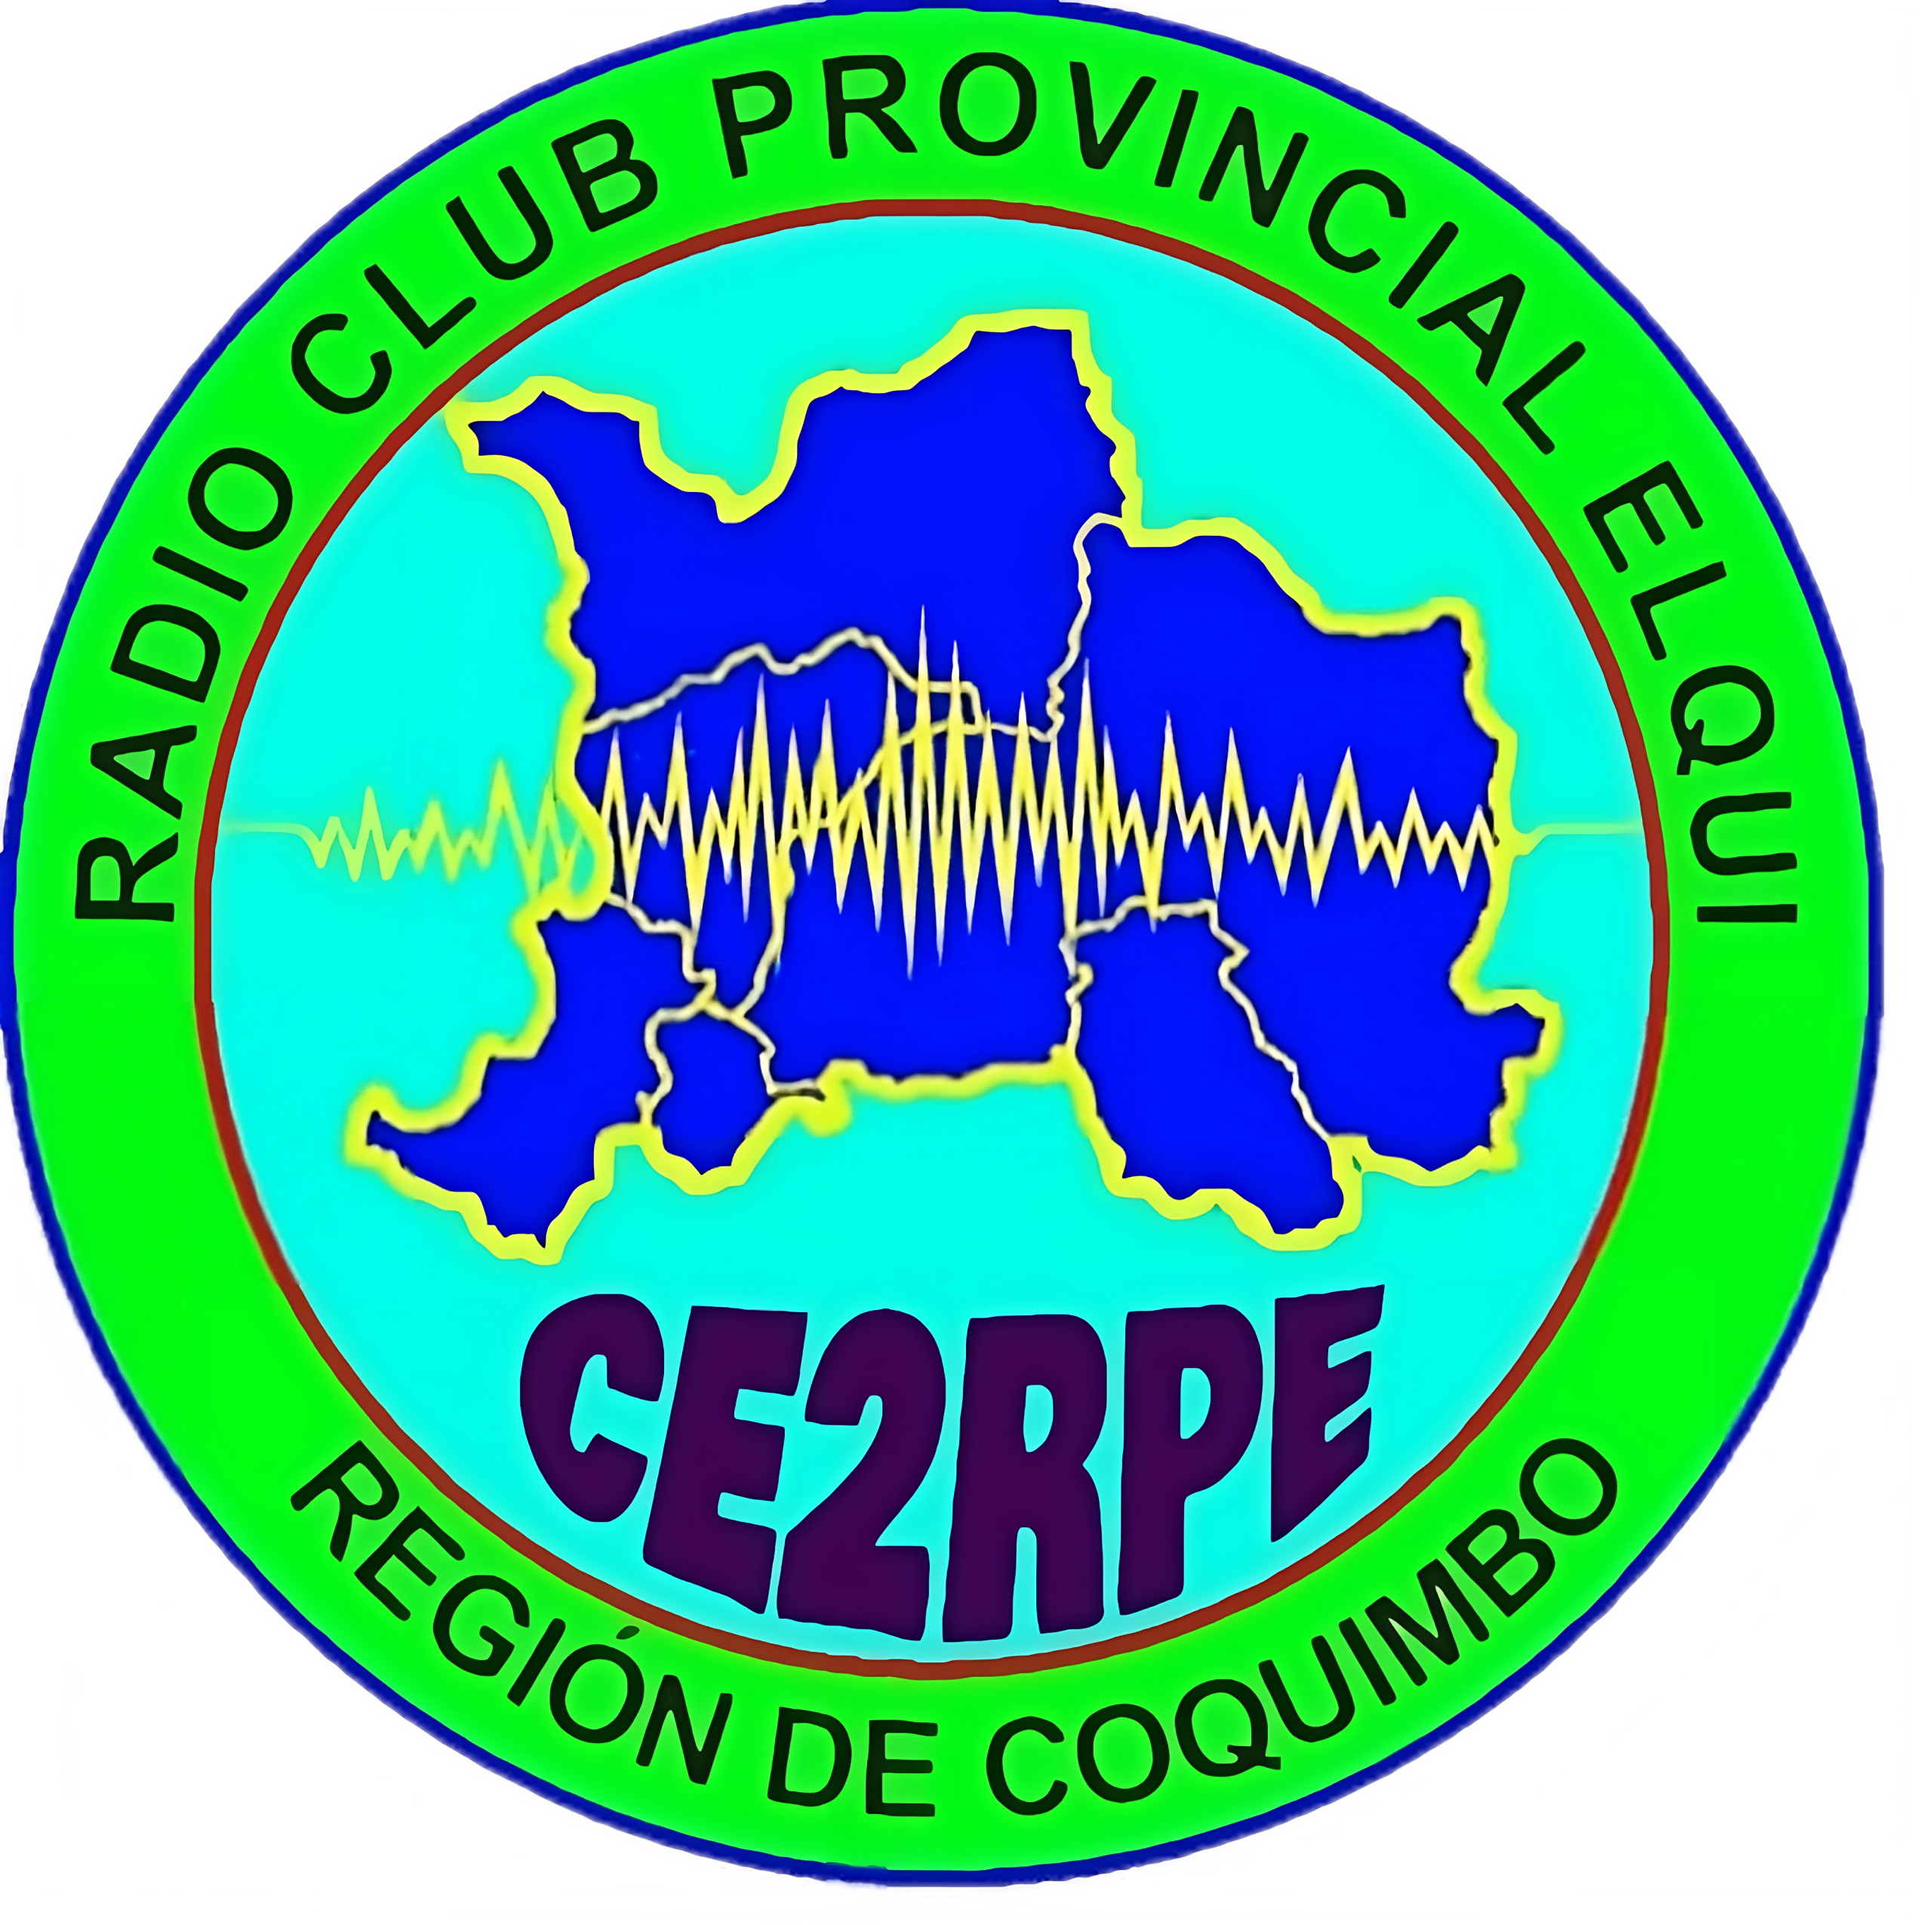 Logo del radioclub ce2rpe